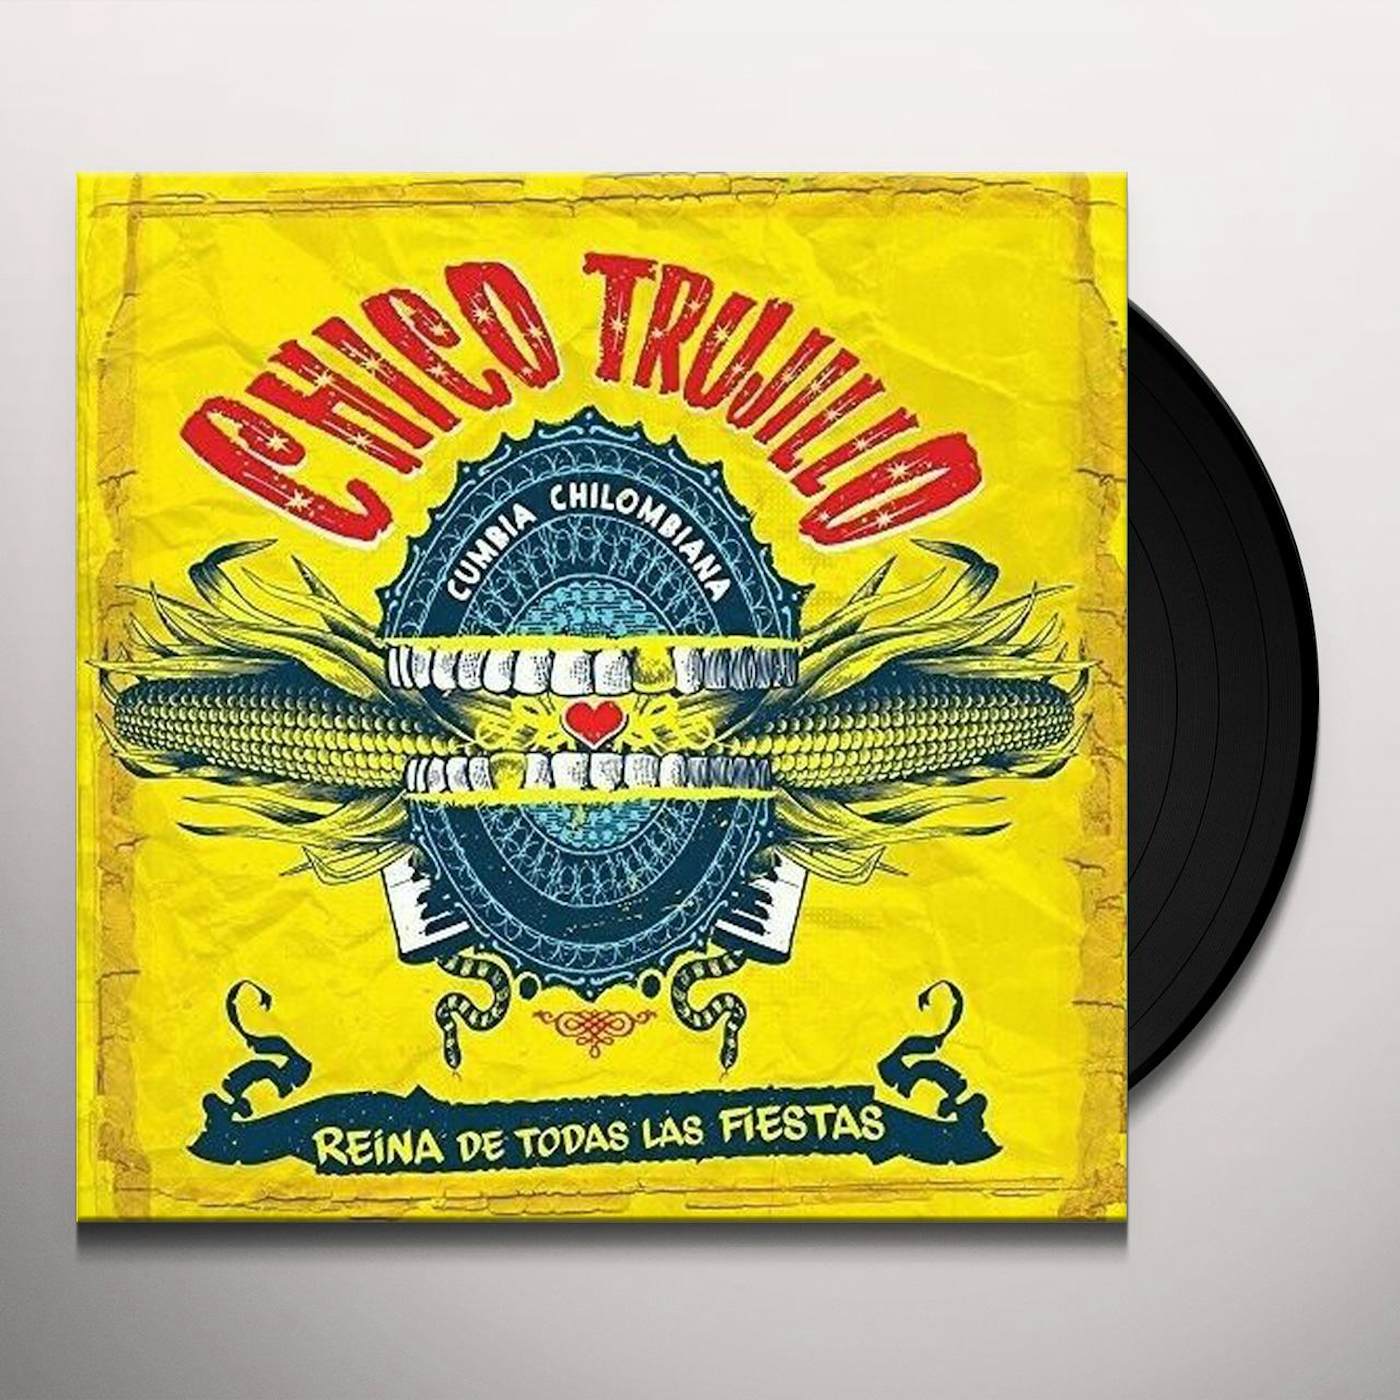 Chico Trujillo Reina de Todas las Fiestas Vinyl Record